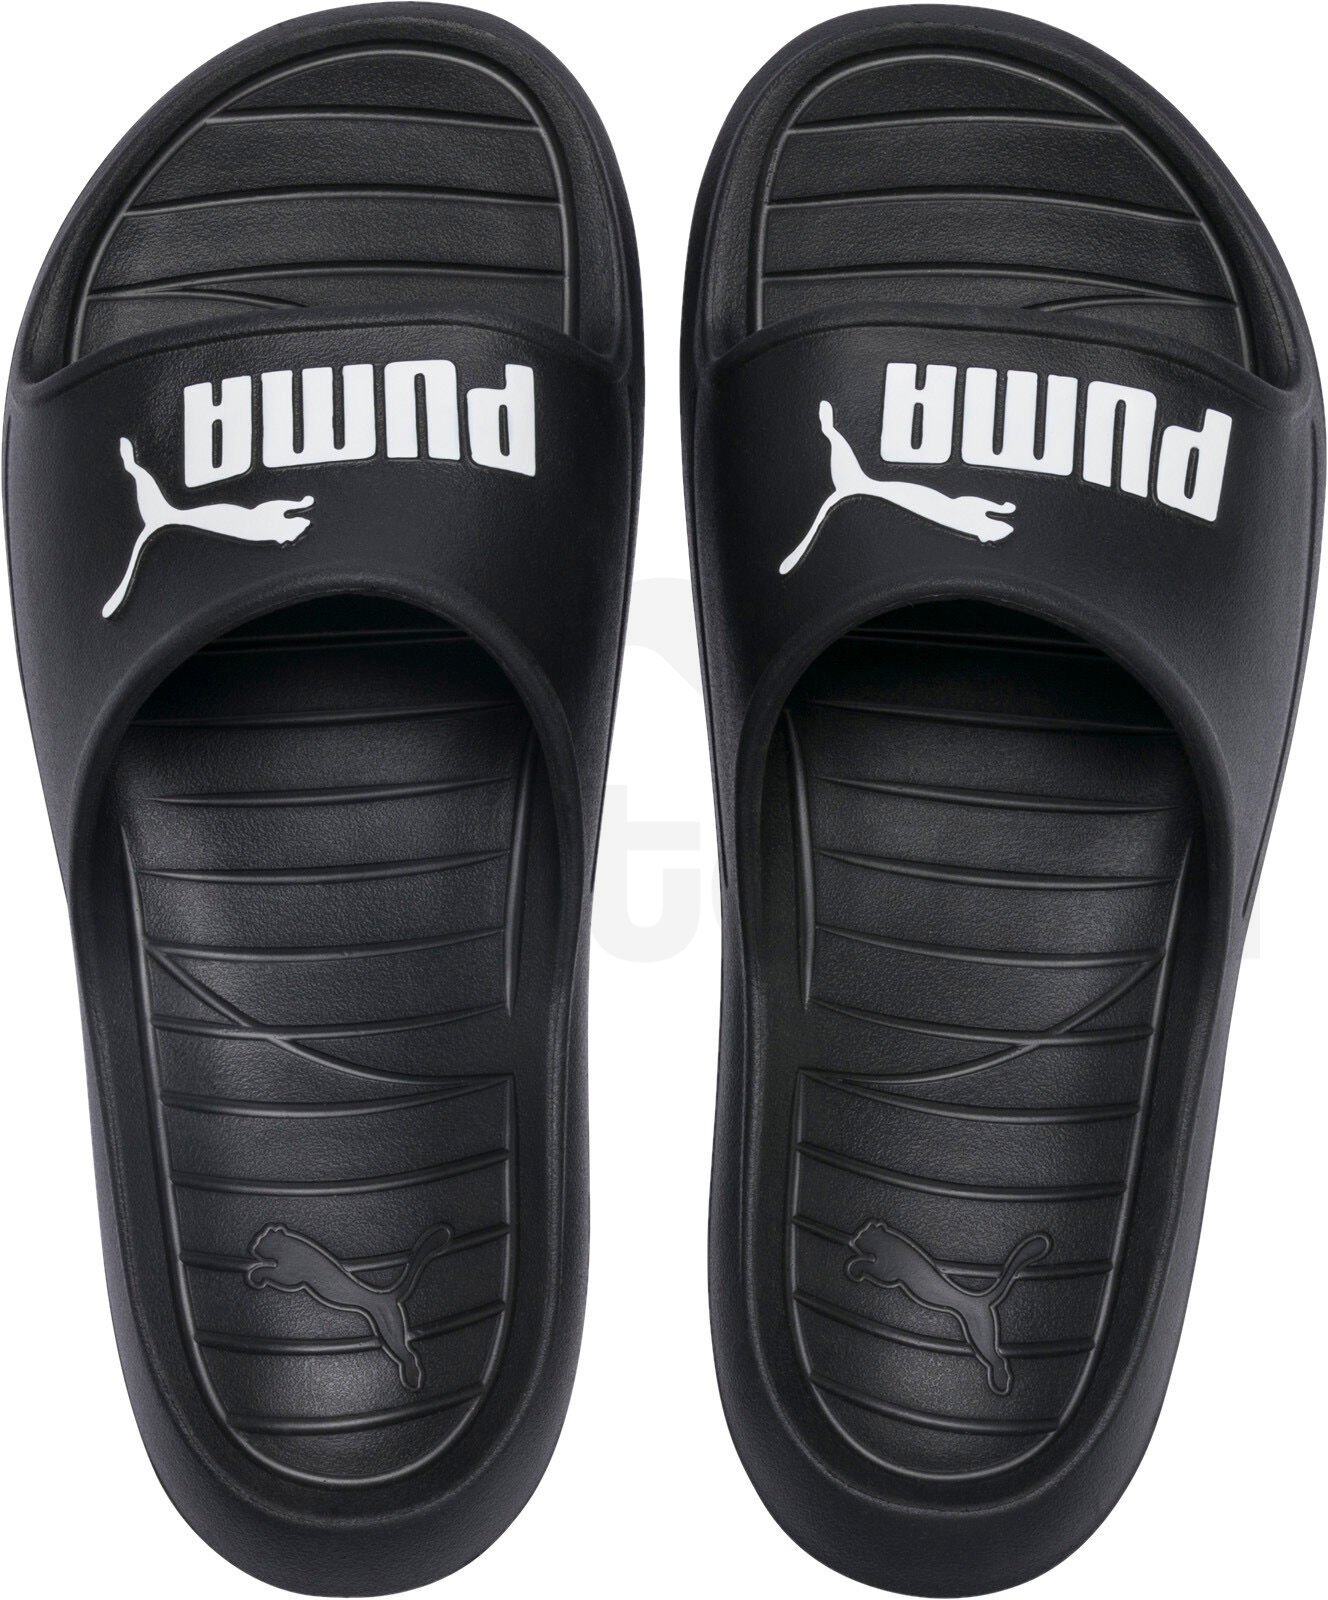 Pantofle Puma Divecat v2 - černá/bílá